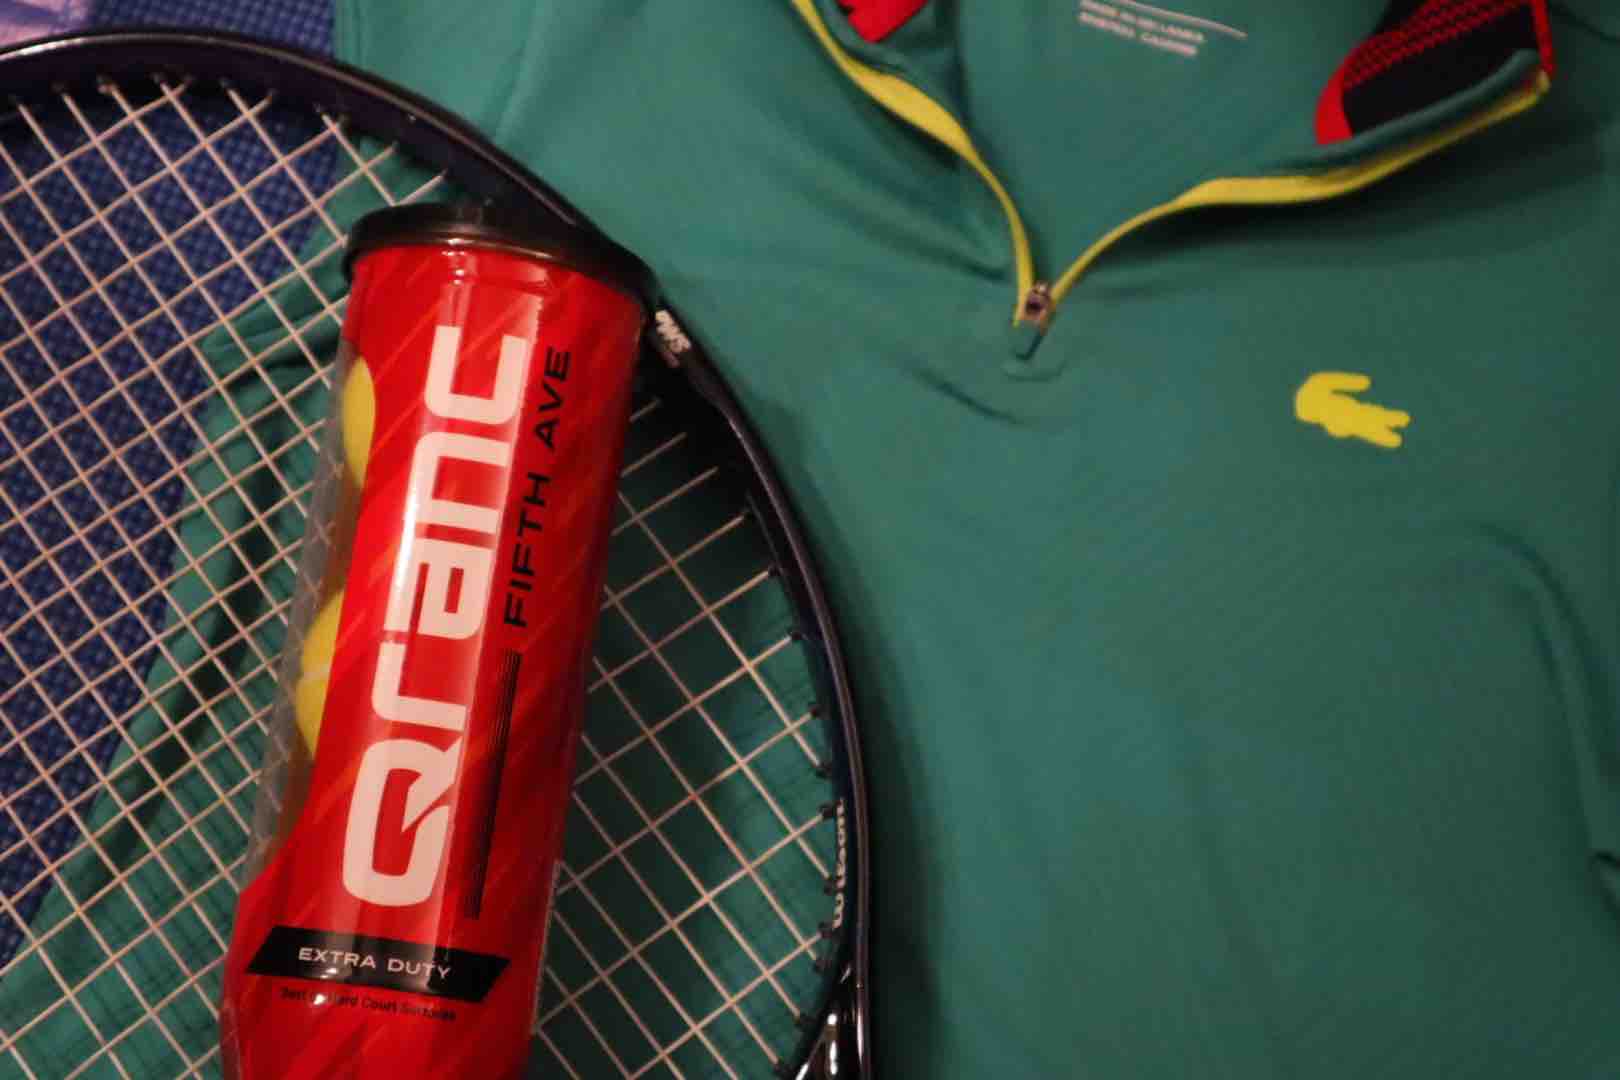 Why you will enjoy the u.s. open tennis- stylish gear